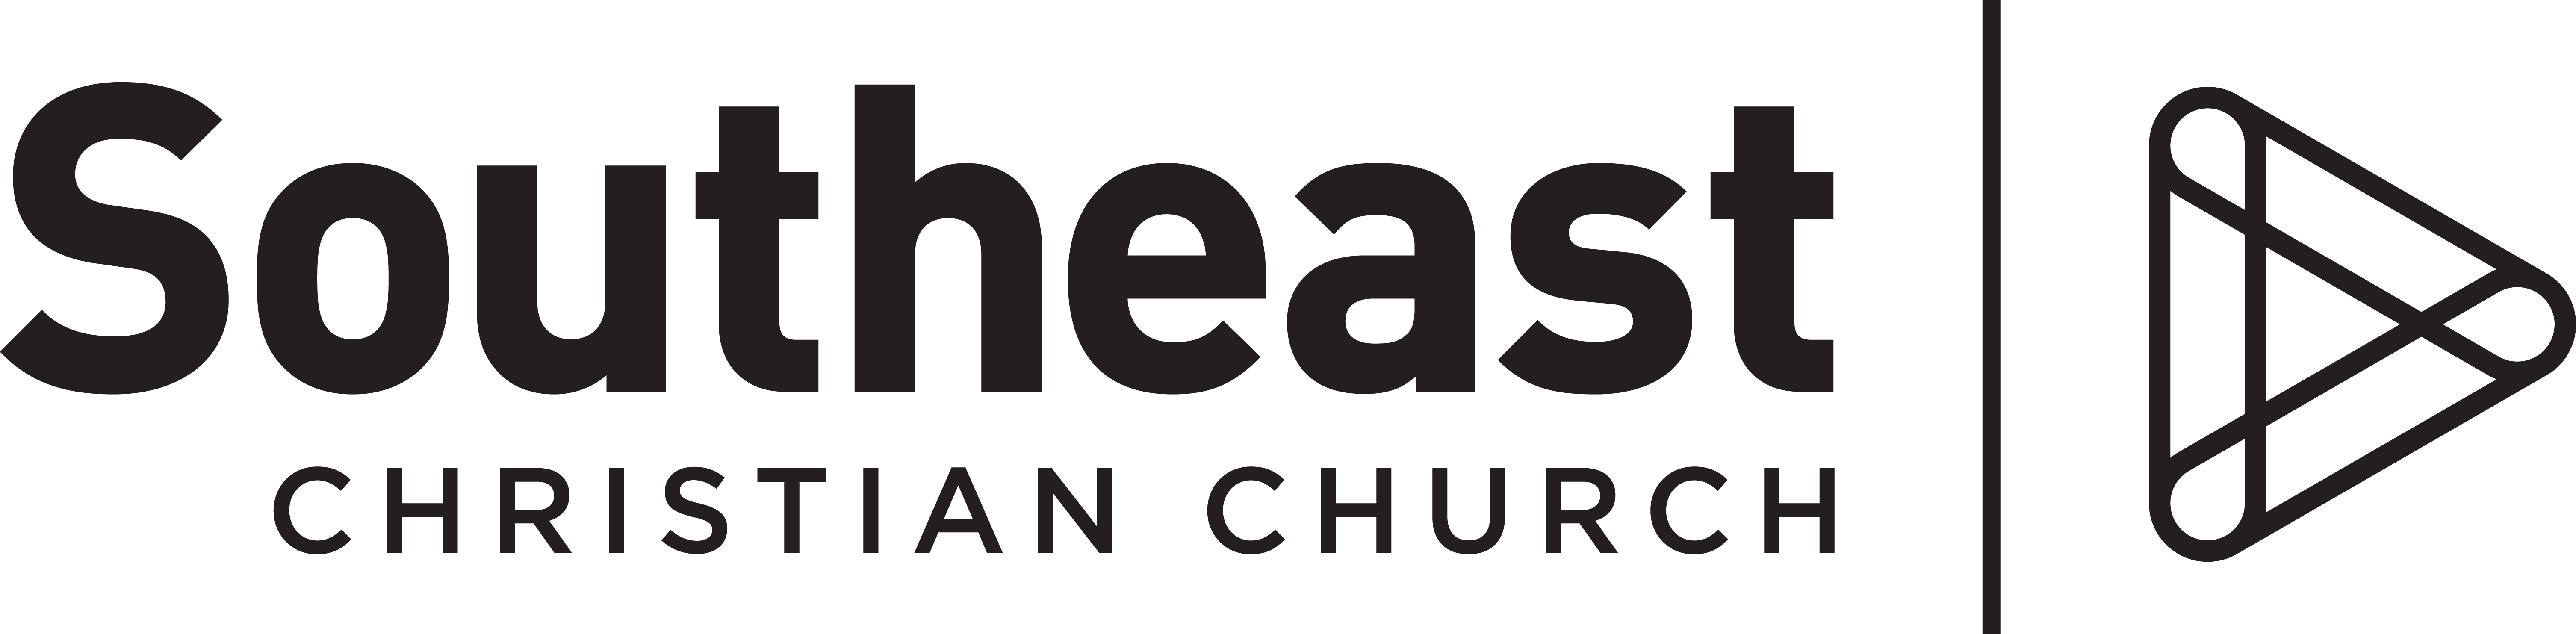 Southeast Christian Church Seating Chart